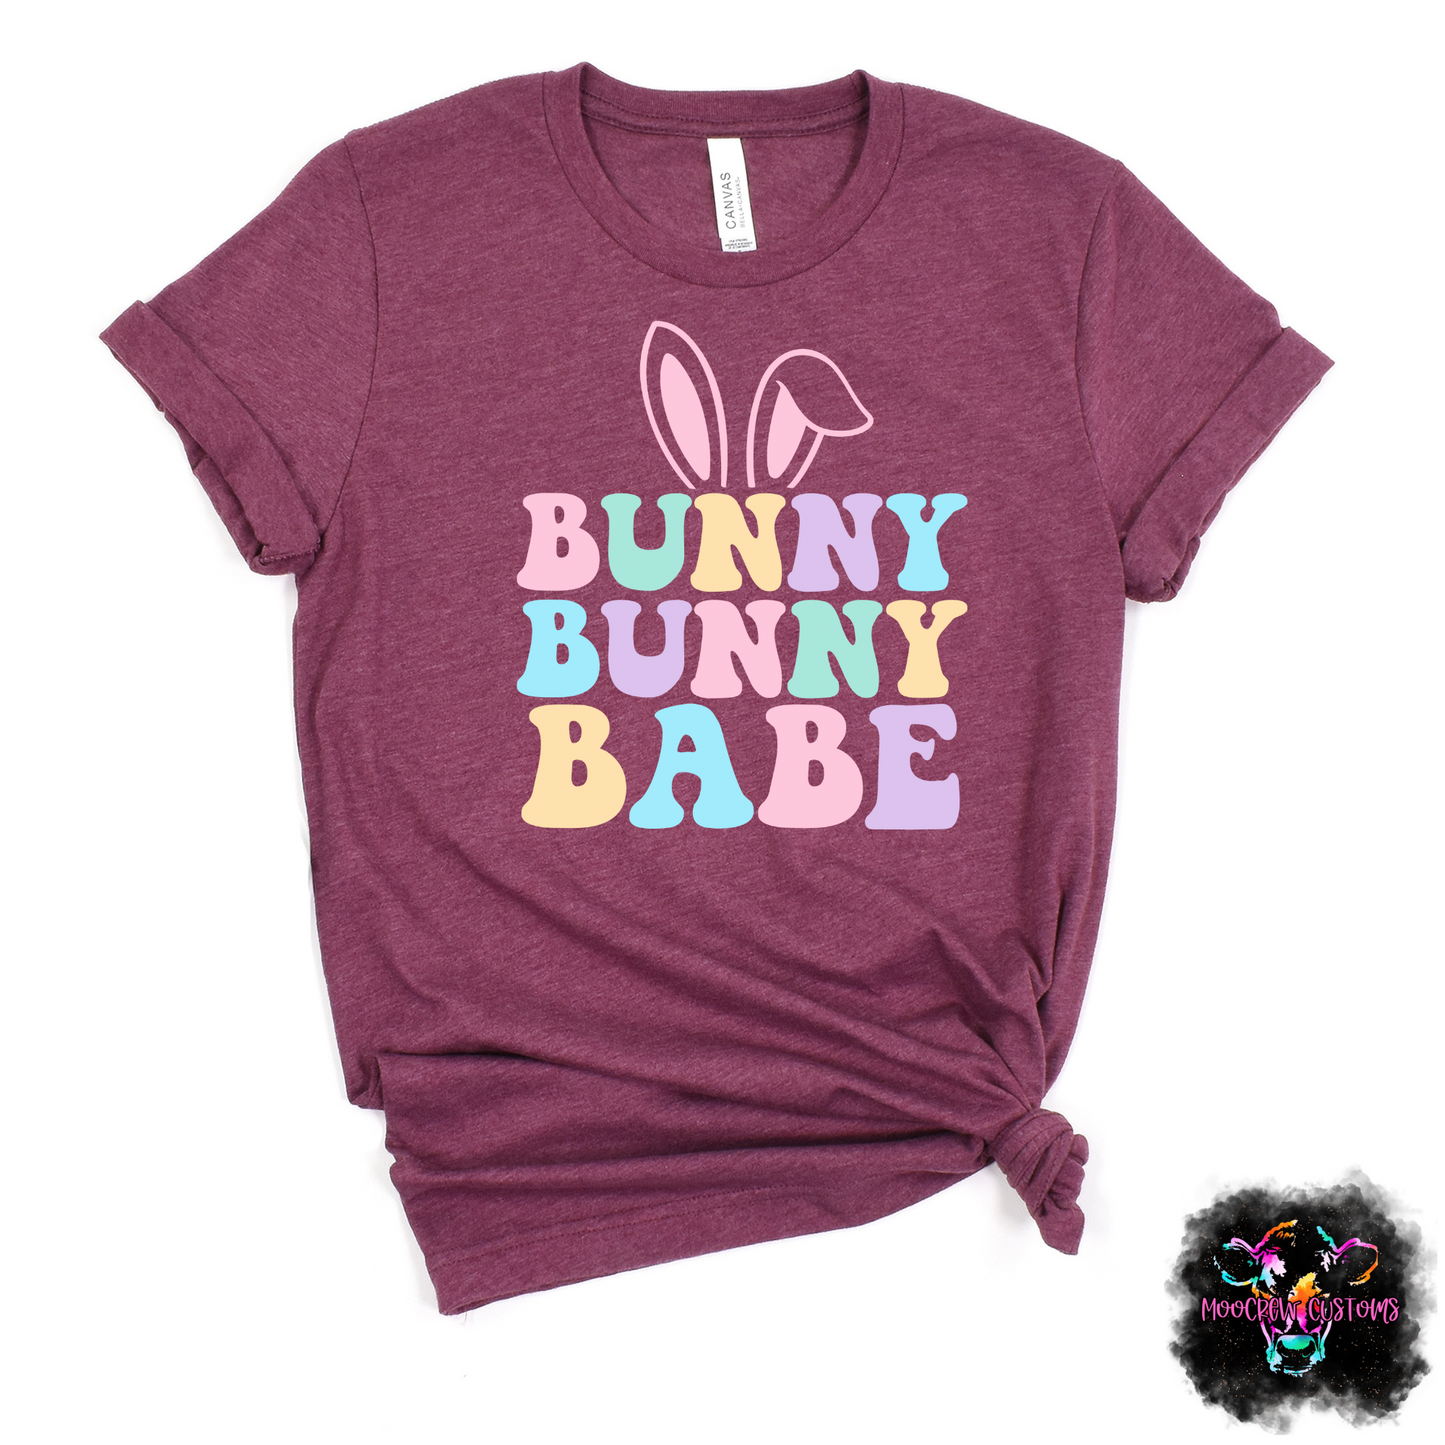 Bunny Bunny Babe Tshirt